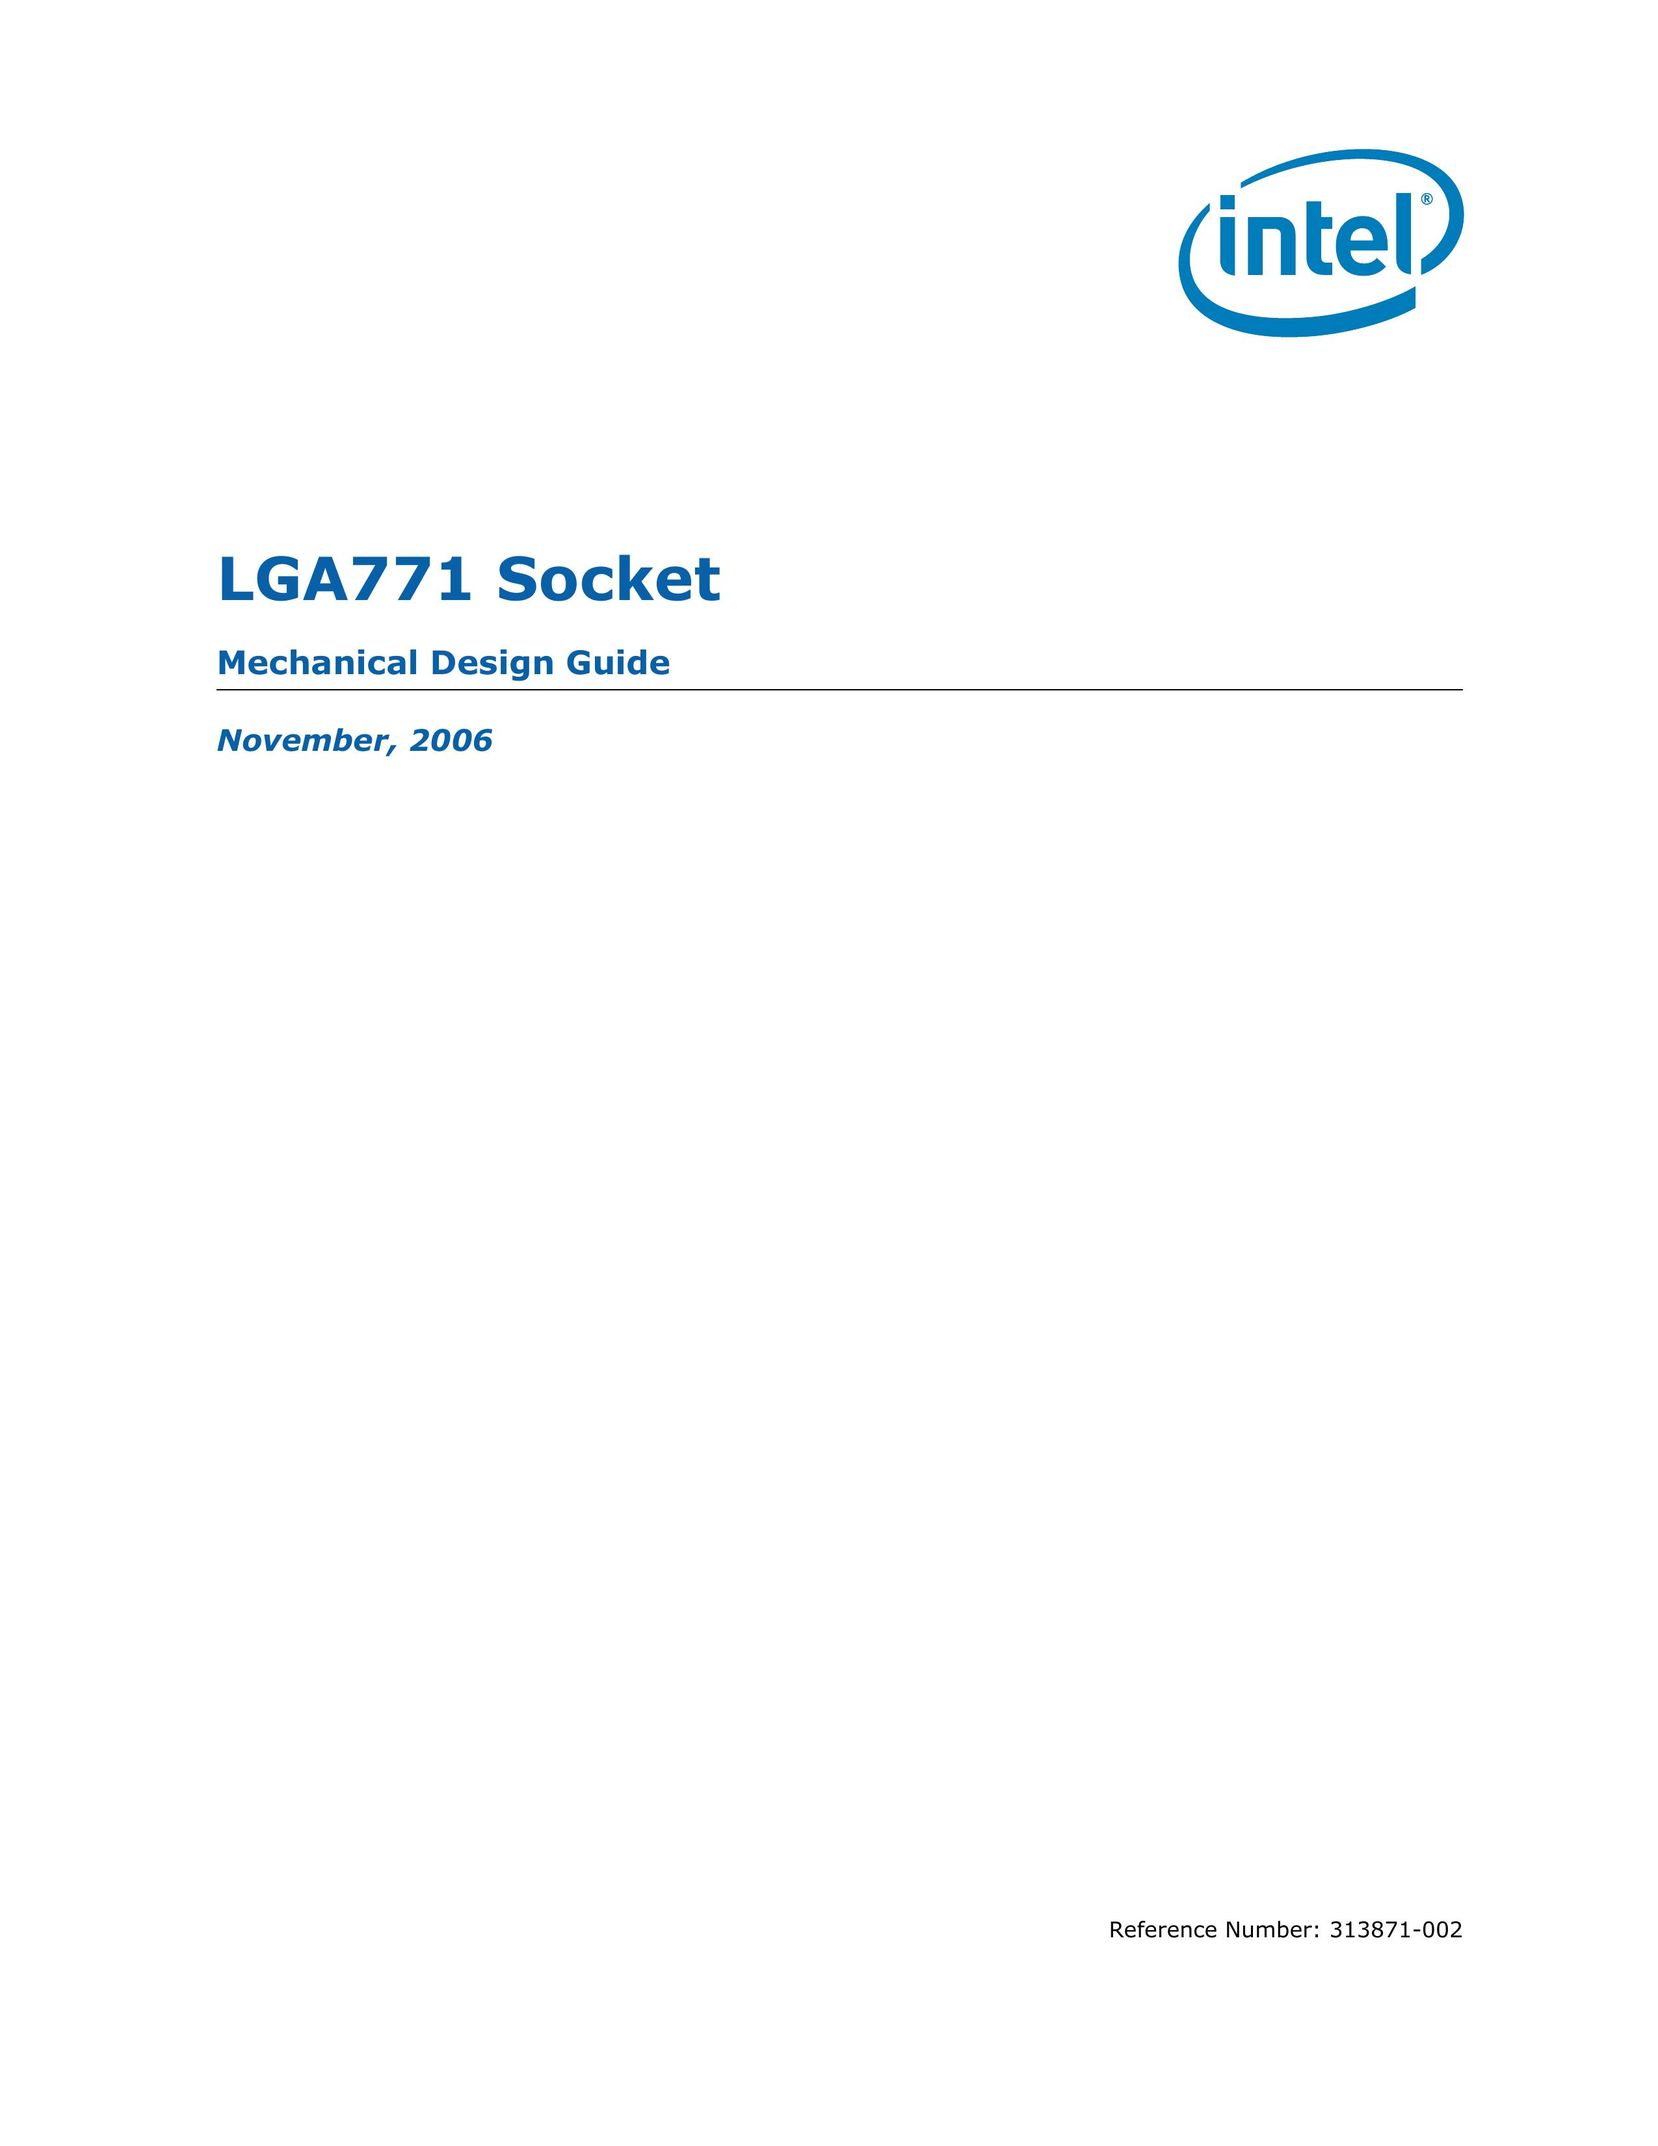 Intel LGA 771 Whiteboard Accessories User Manual